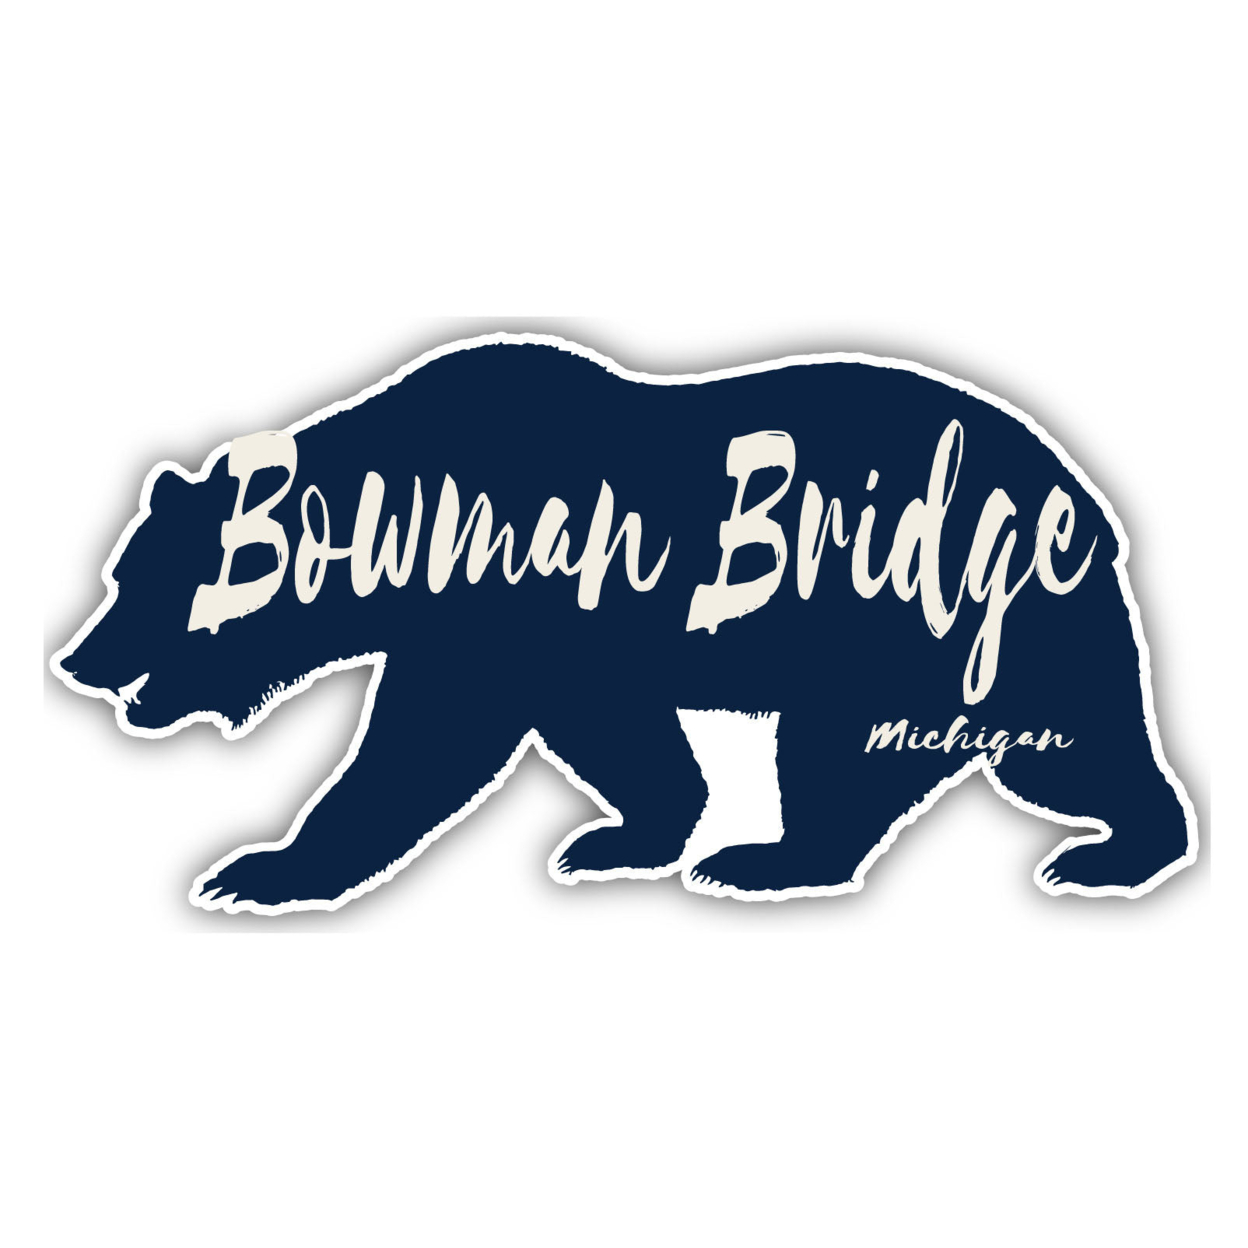 Bowman Bridge Michigan Souvenir Decorative Stickers (Choose Theme And Size) - Single Unit, 6-Inch, Bear